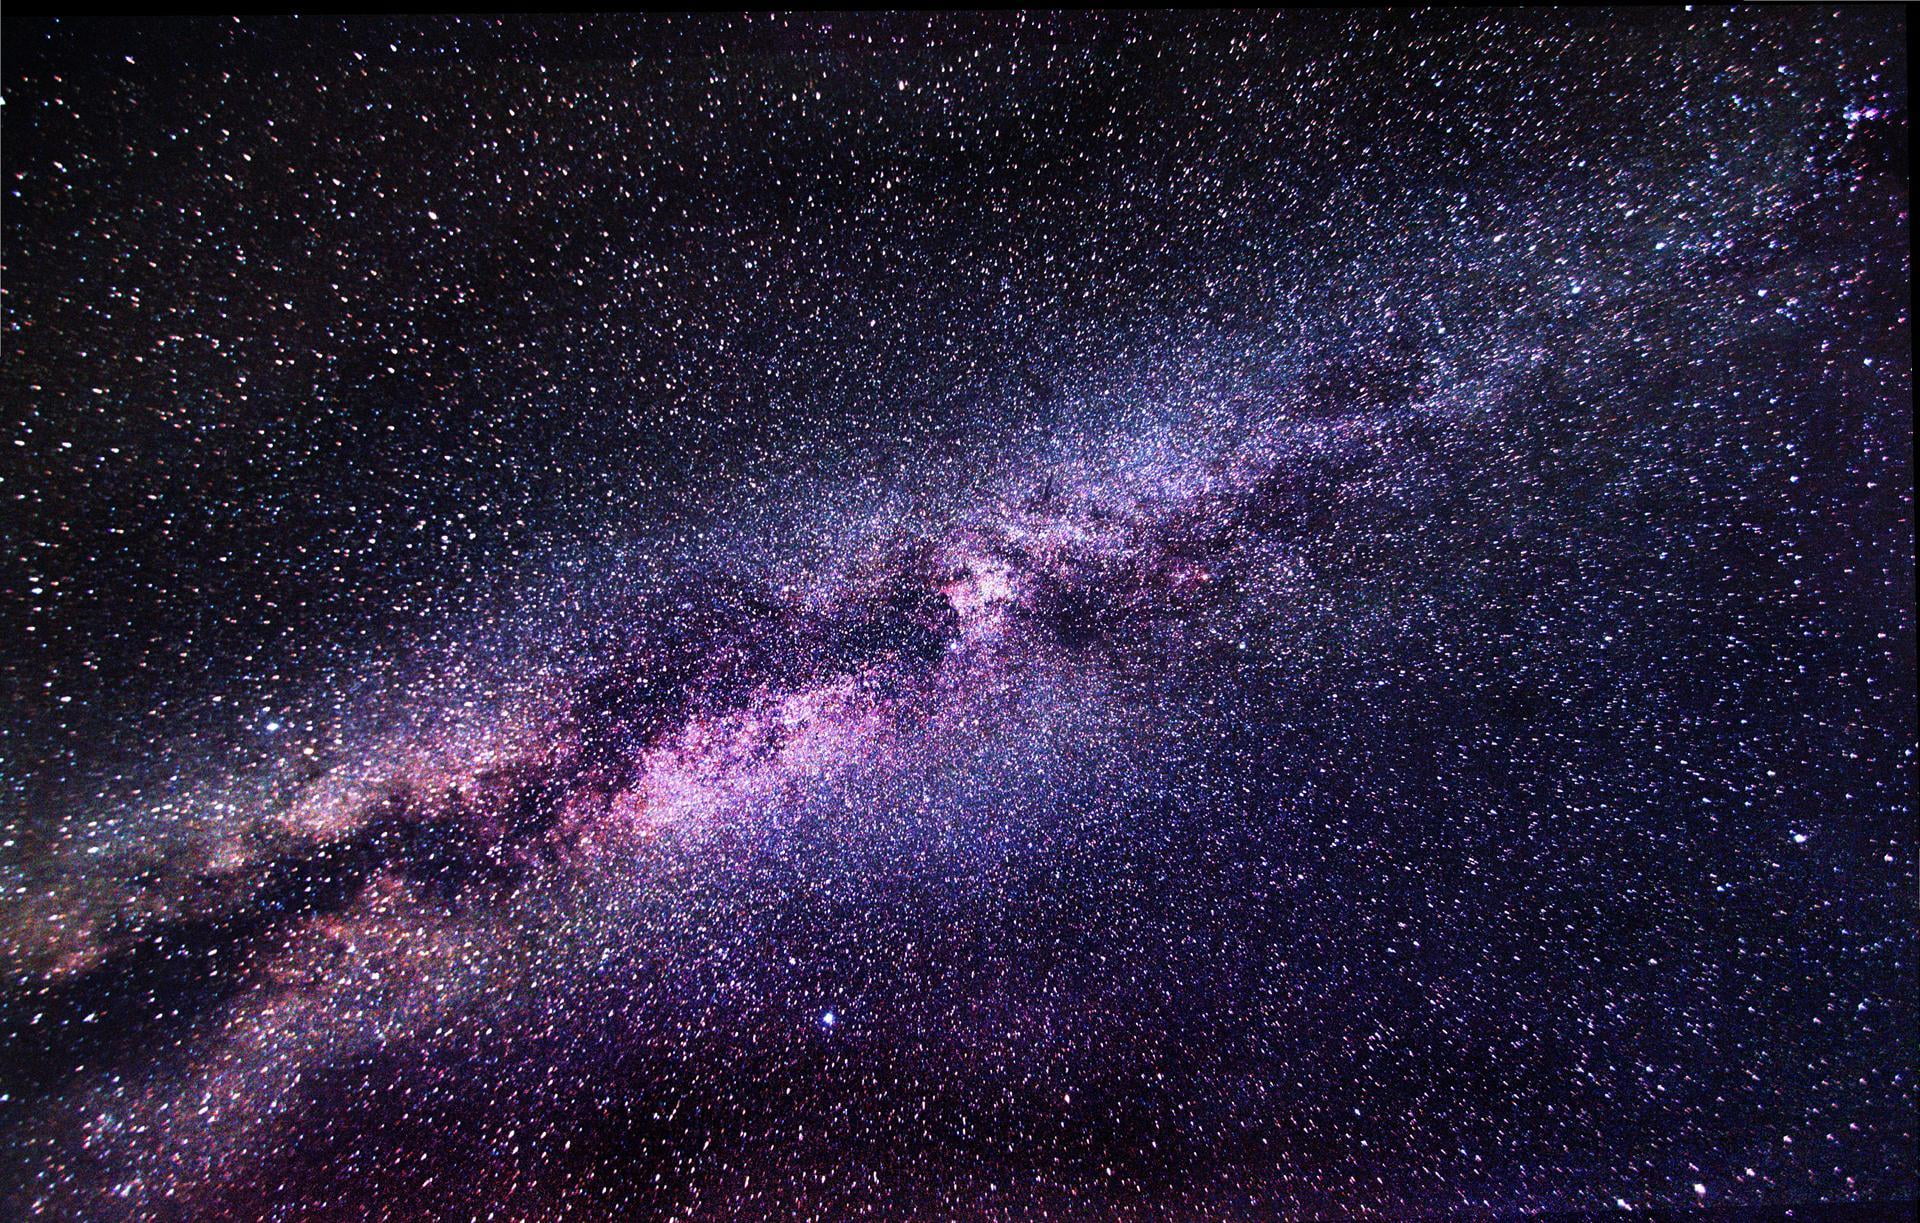 Milky Way illustration, space, stars, The Milky Way, astronomy